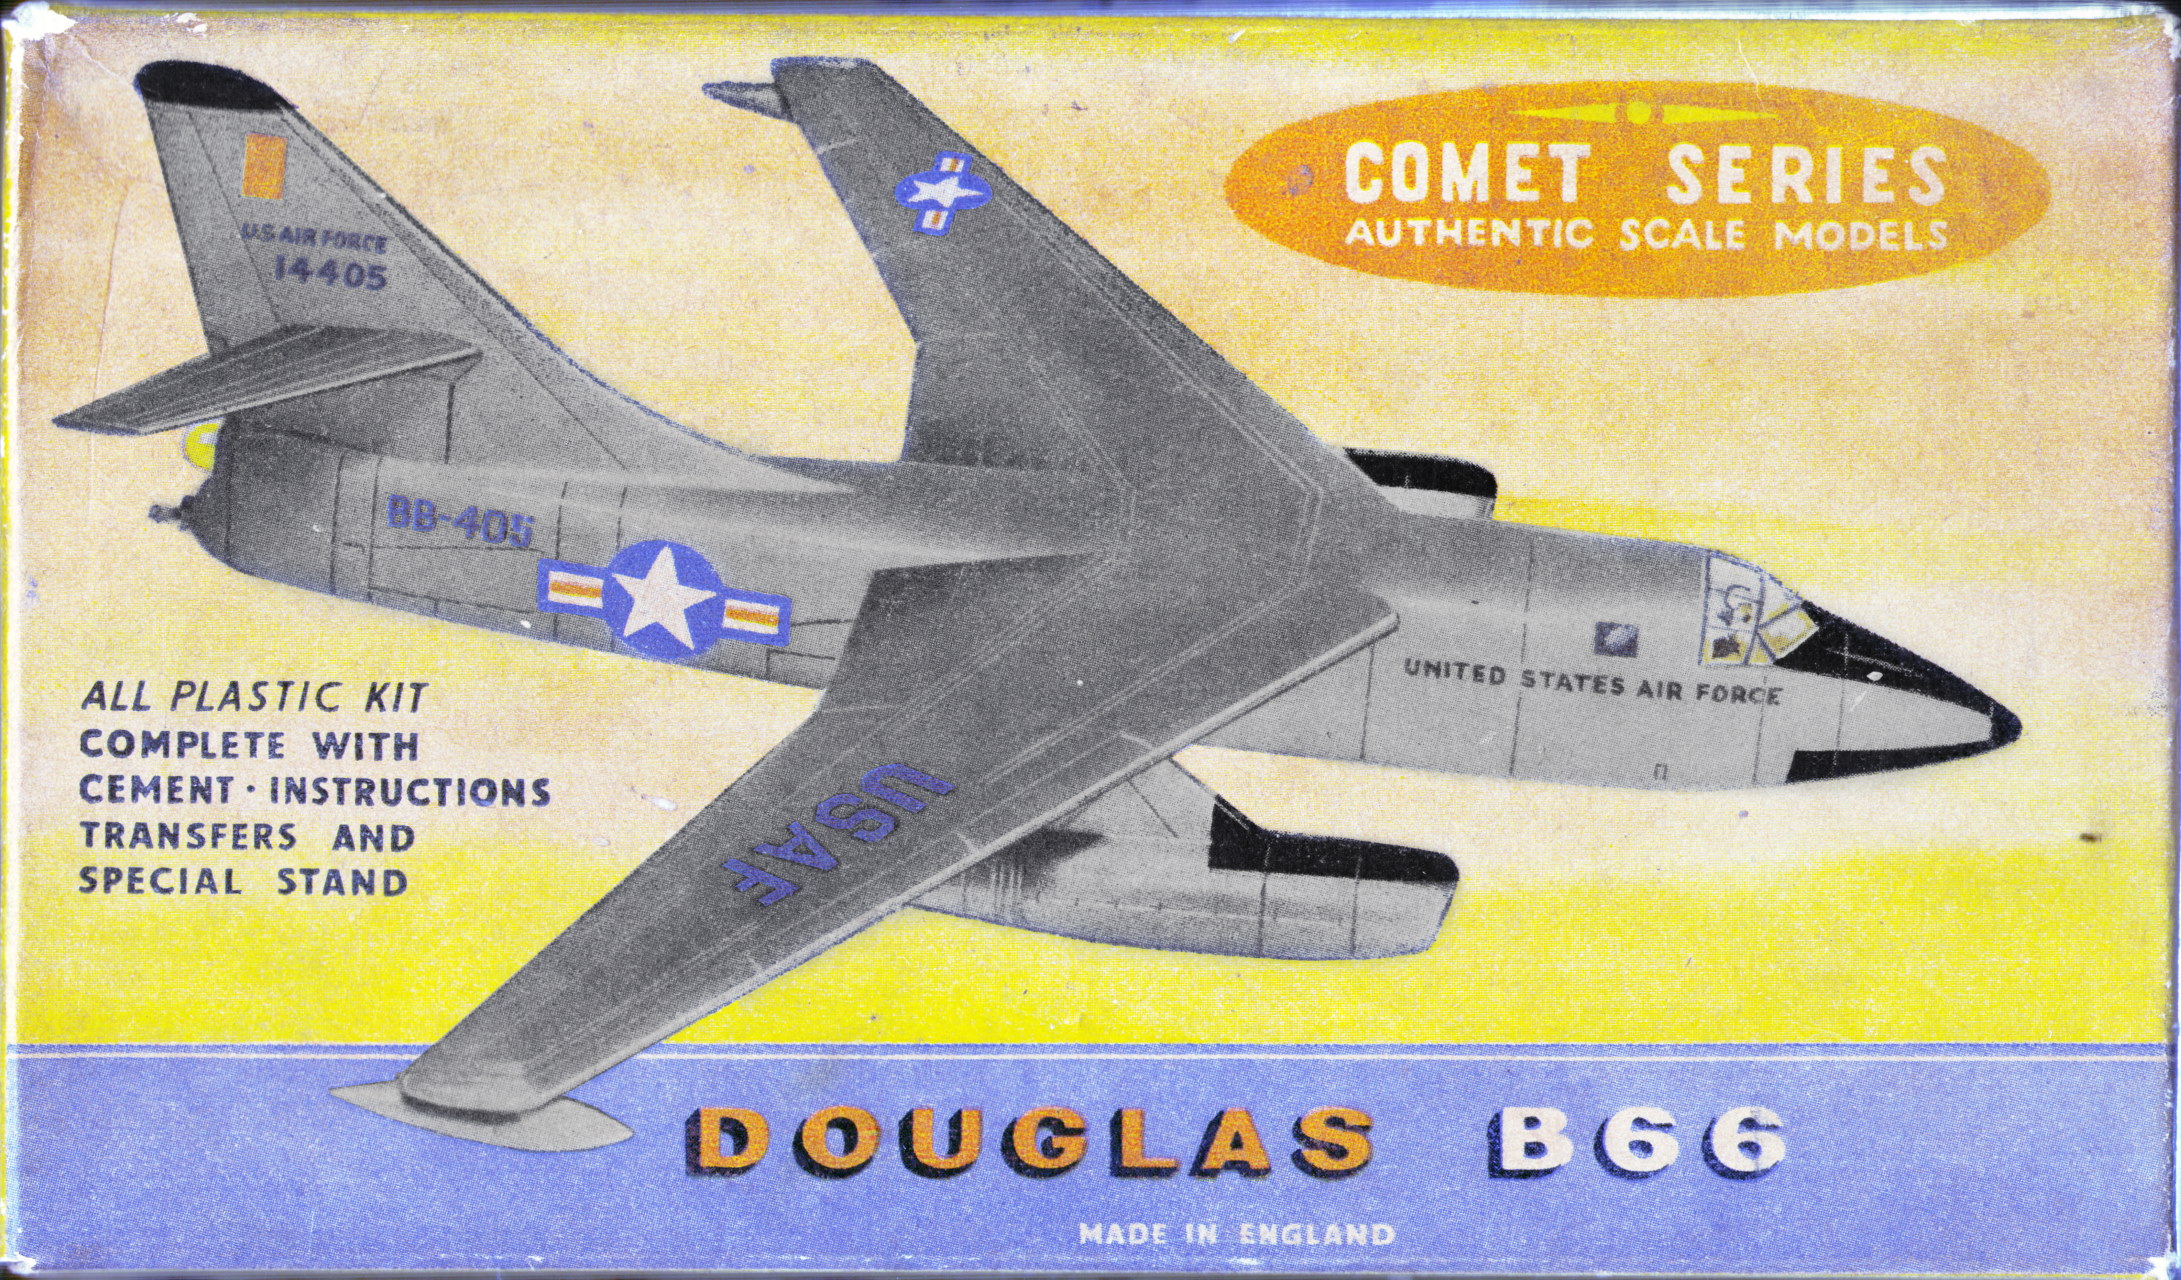 Коробка FROG 379P Douglas B-66, International Model Aircraft, 1959